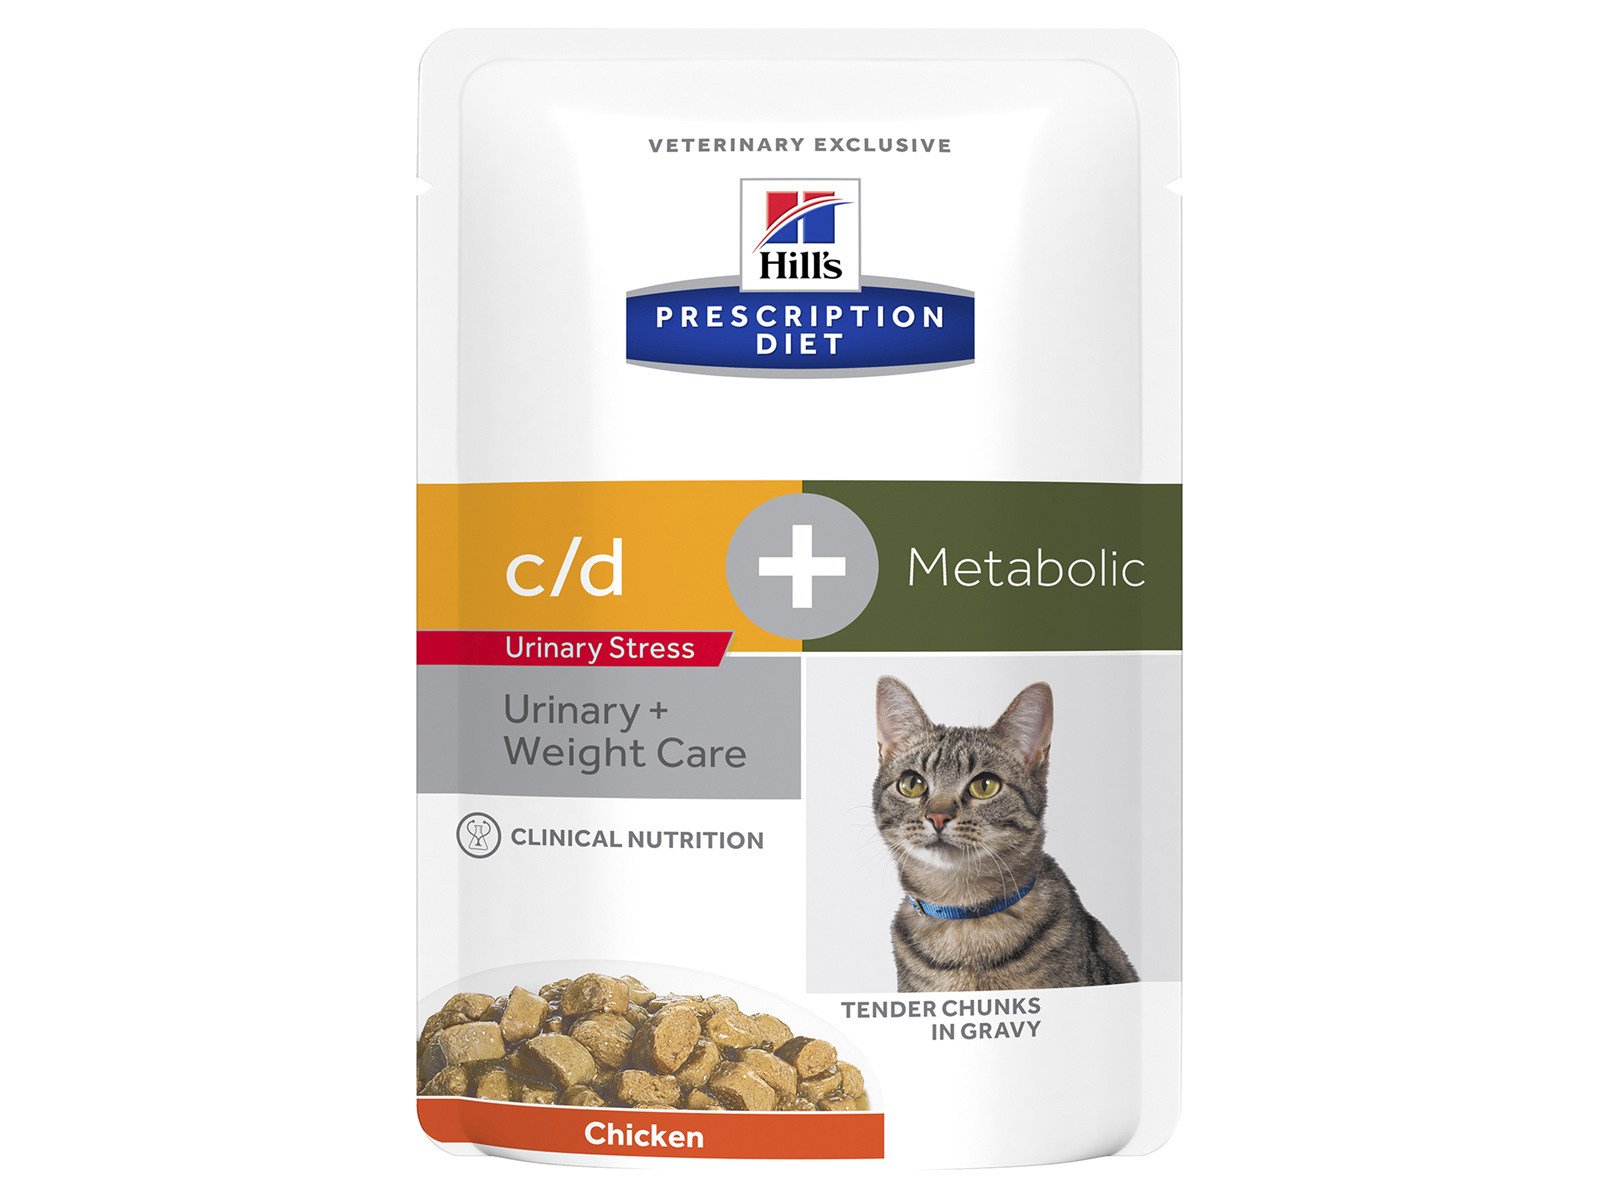 Hill's Prescription Diet c/d Urinary Stress Plus Metabolic Cat Food